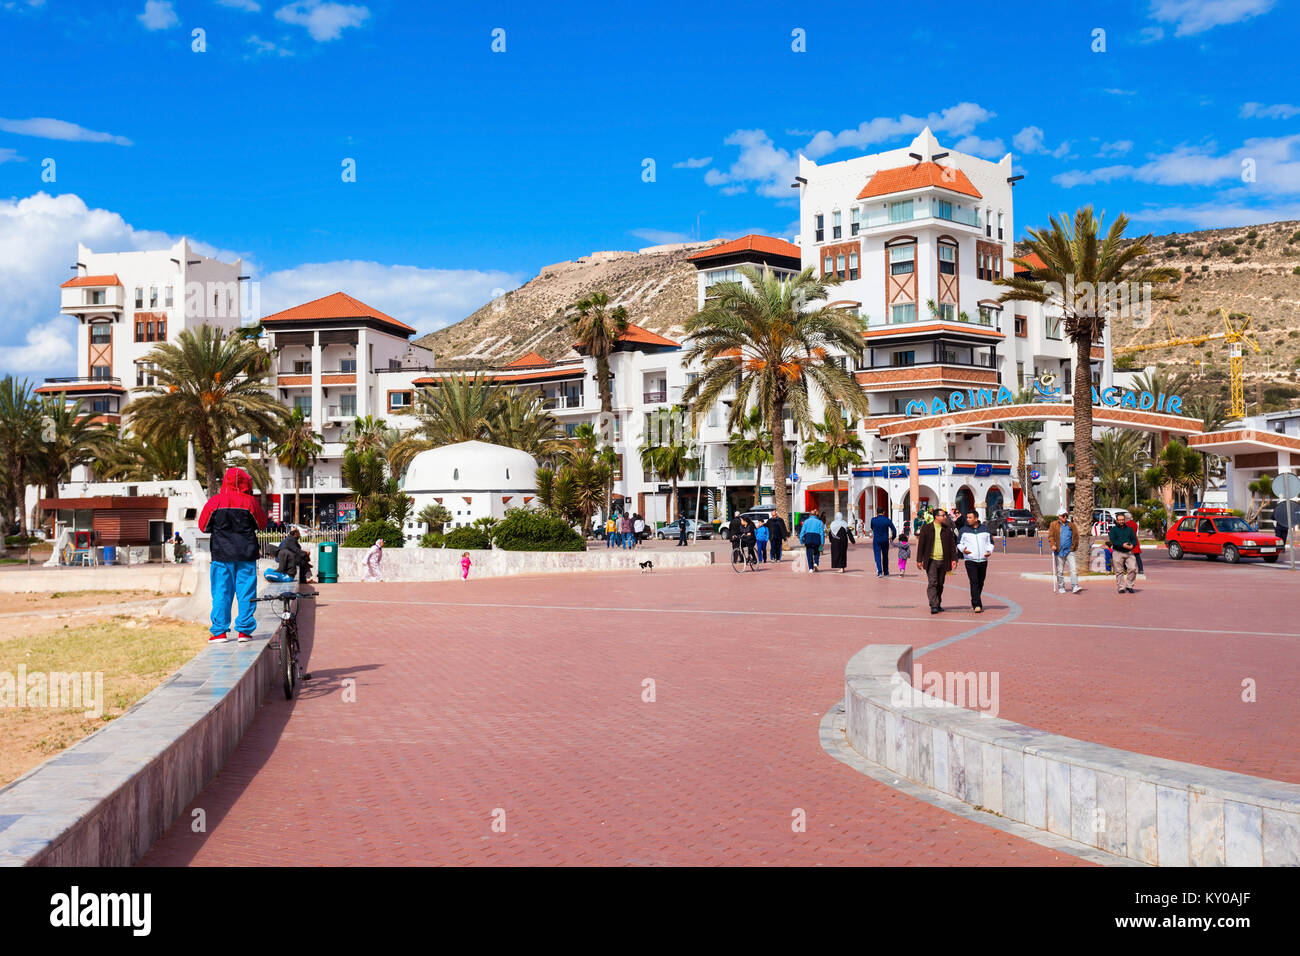 AGADIR, MOROCCO - FEBRUARY 21, 2016: Agadir seafront promenade in Morocco.  Agadir is a major city in Morocco located on the shore of the Atlantic Ocea  Stock Photo - Alamy